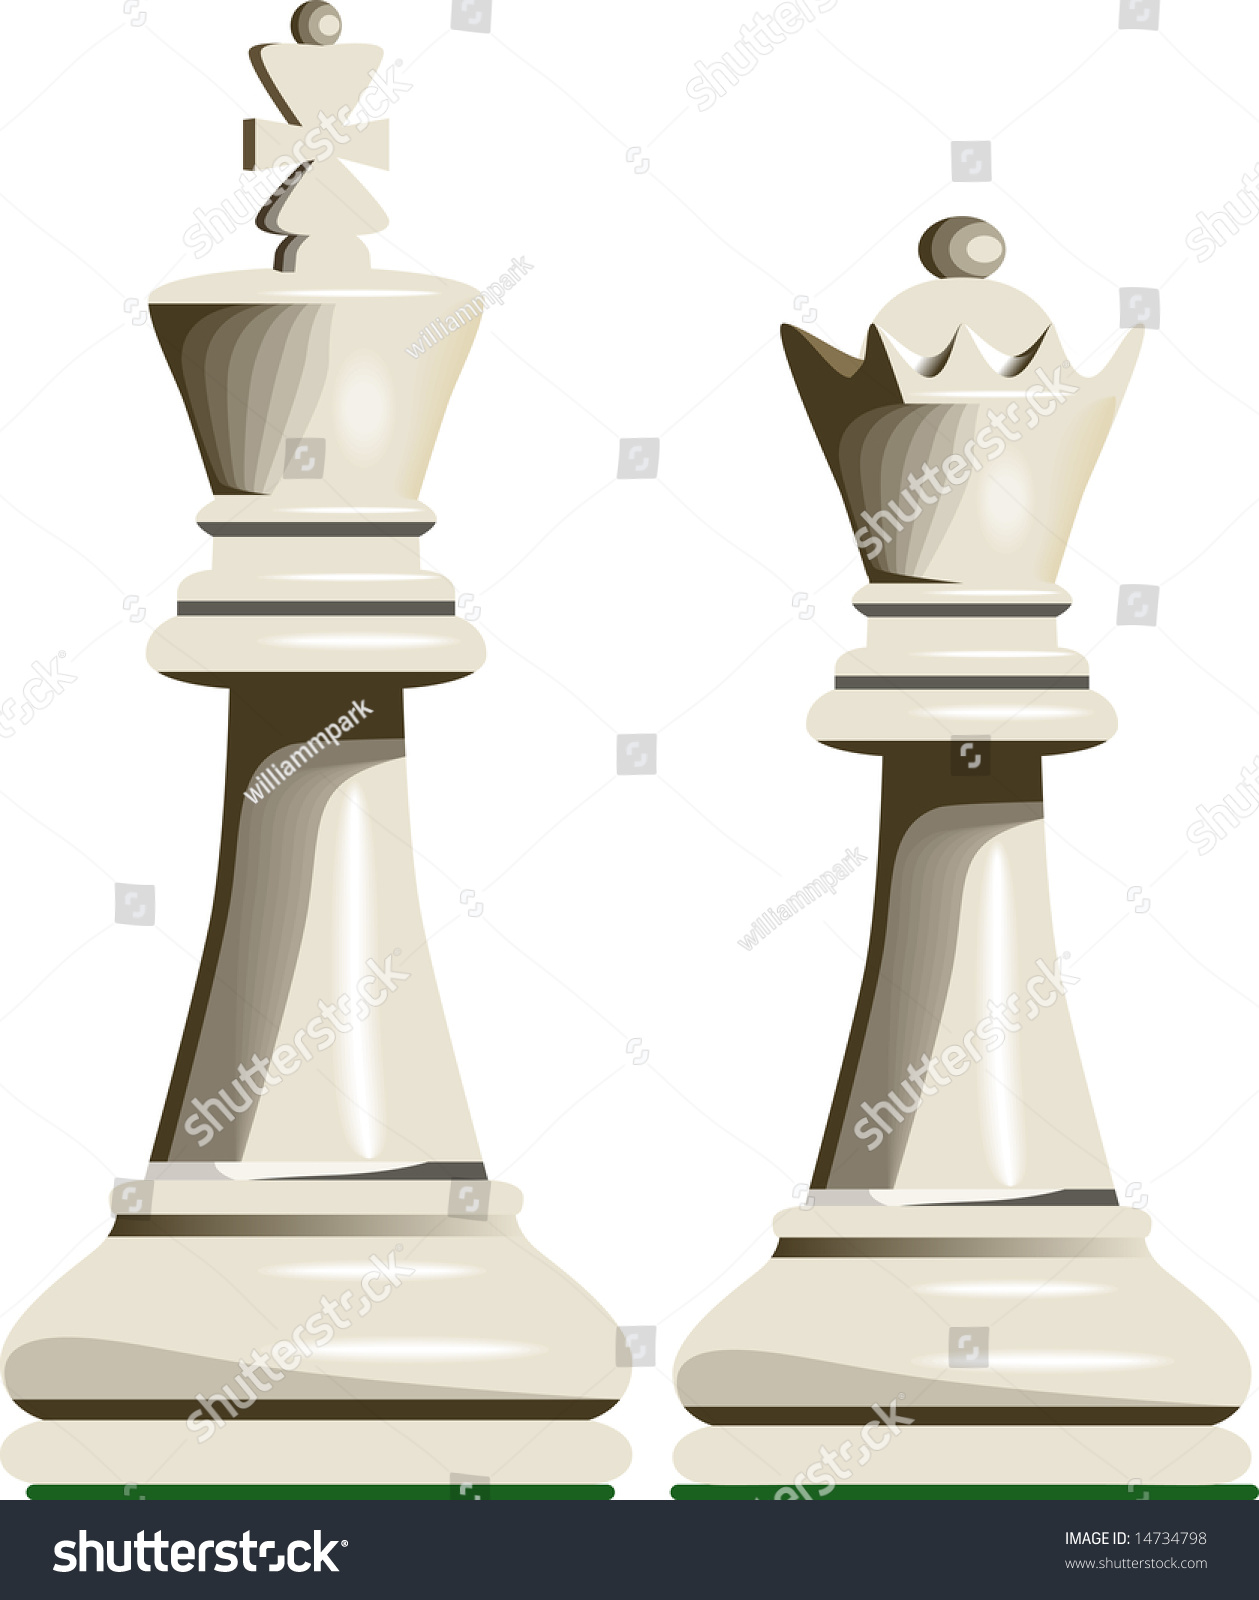 clip art chess queen - photo #43